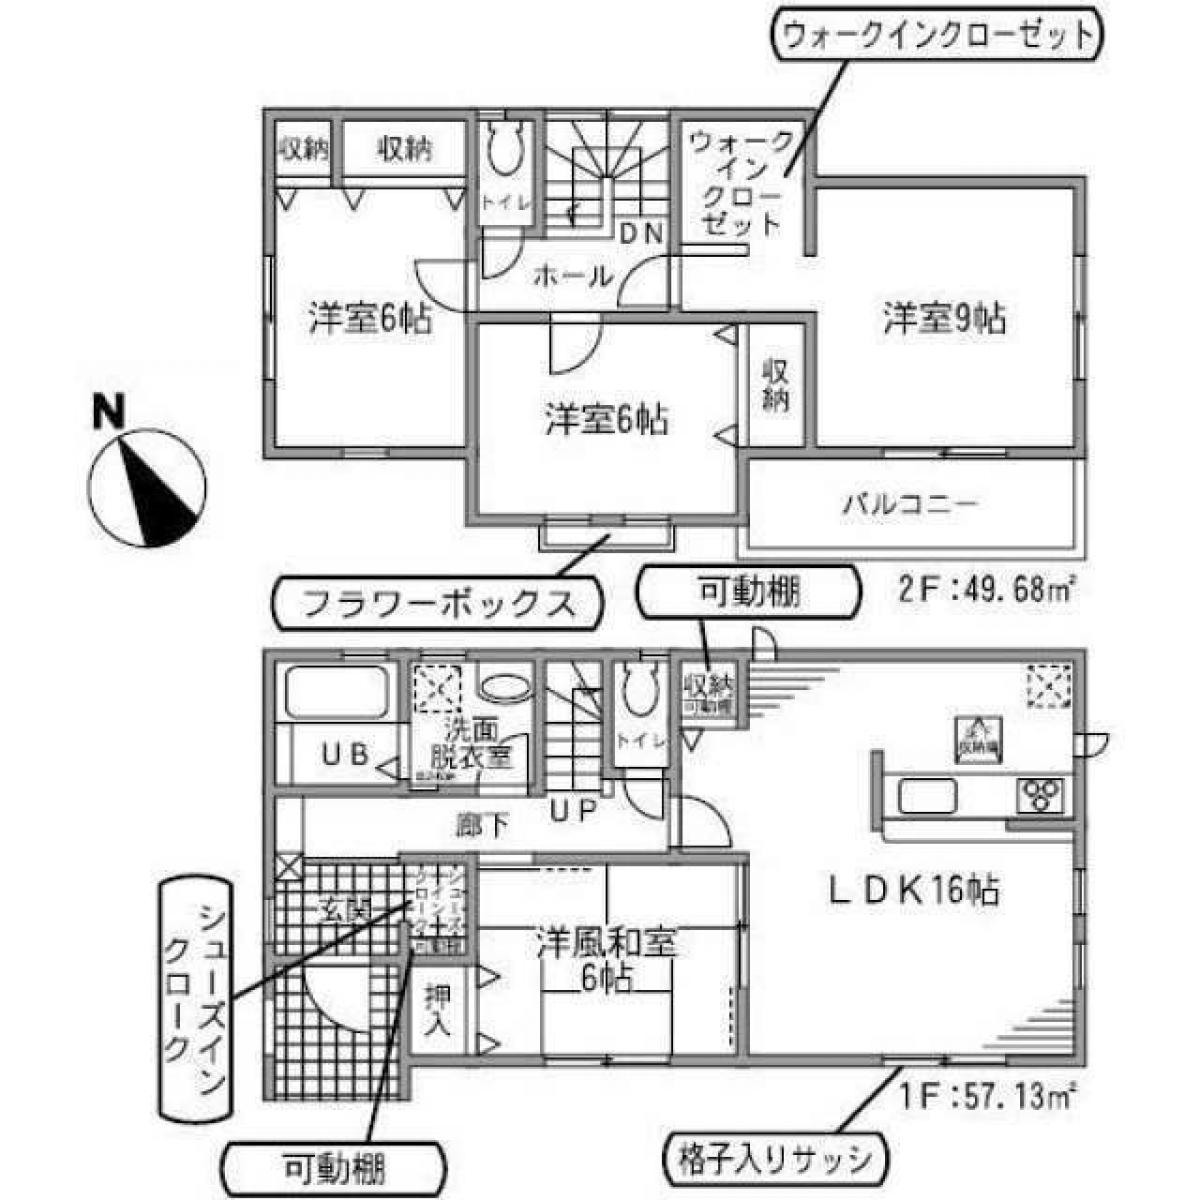 Picture of Home For Sale in Tatebayashi Shi, Gumma, Japan